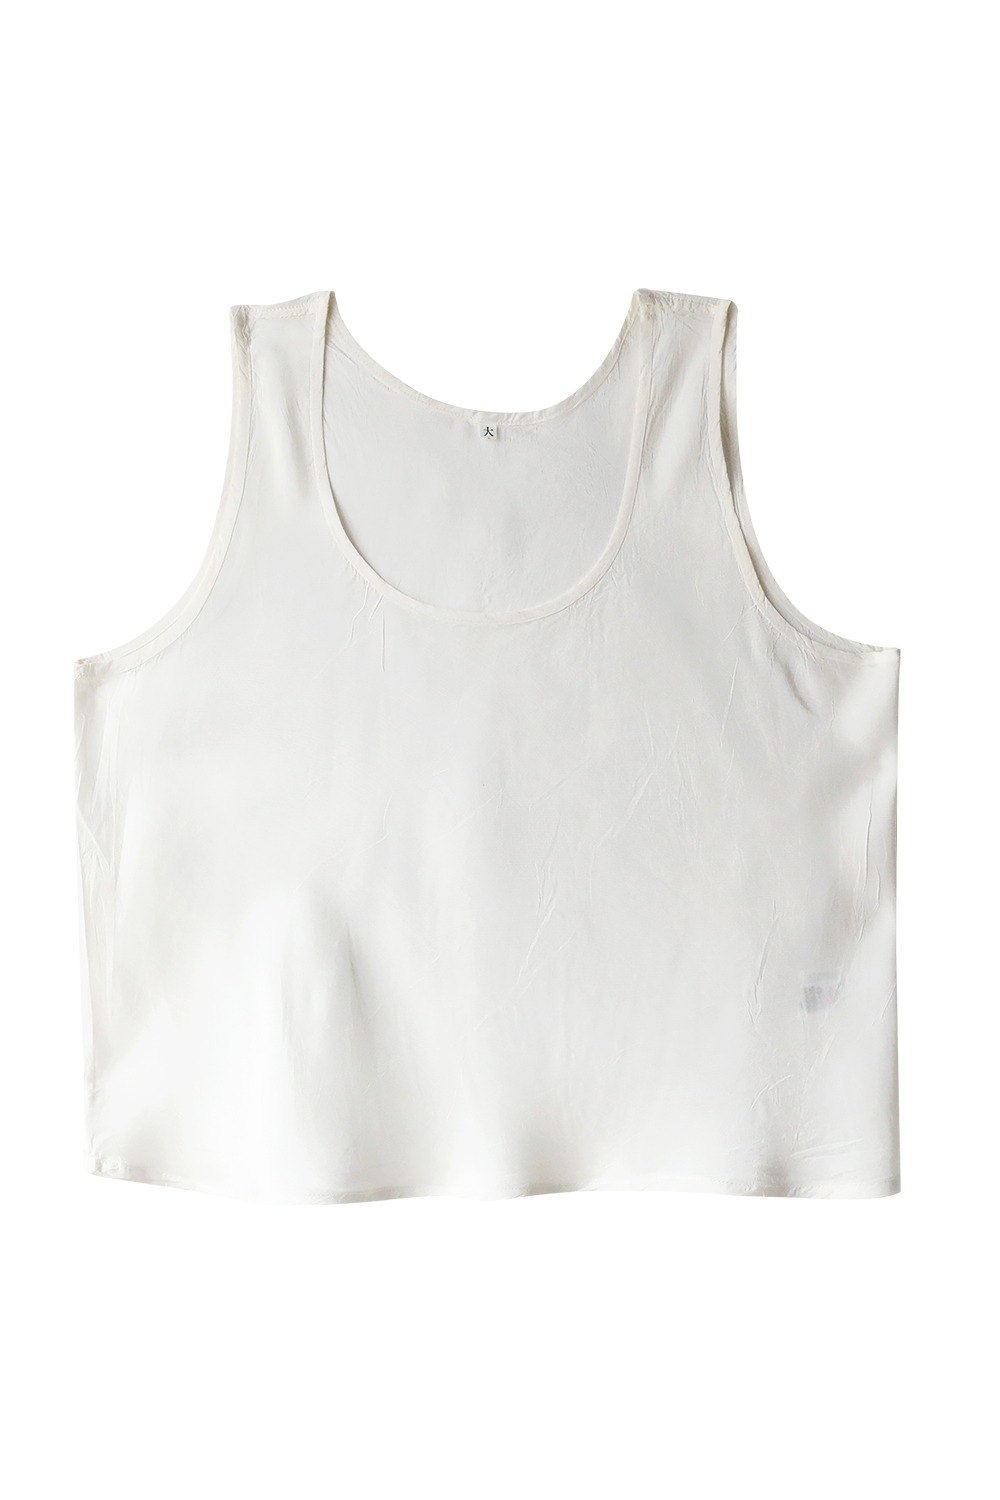 [Eoullim] Punggi  Viscose Rayon Cooling Sleeveless Shirt Sleepwear